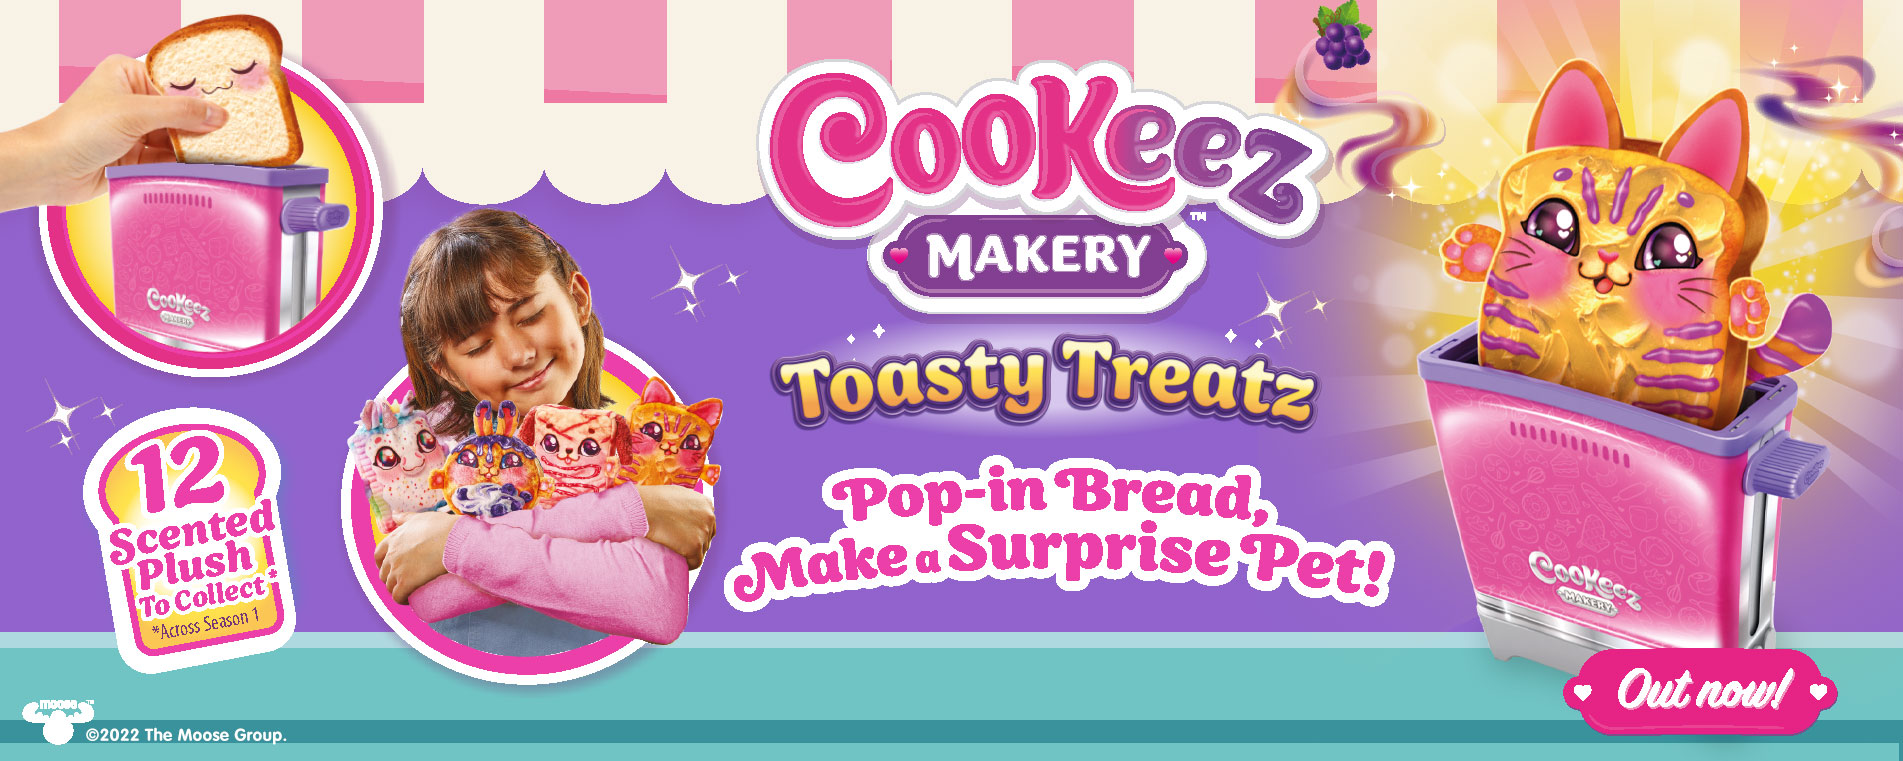 Cookeez Makery Toasties